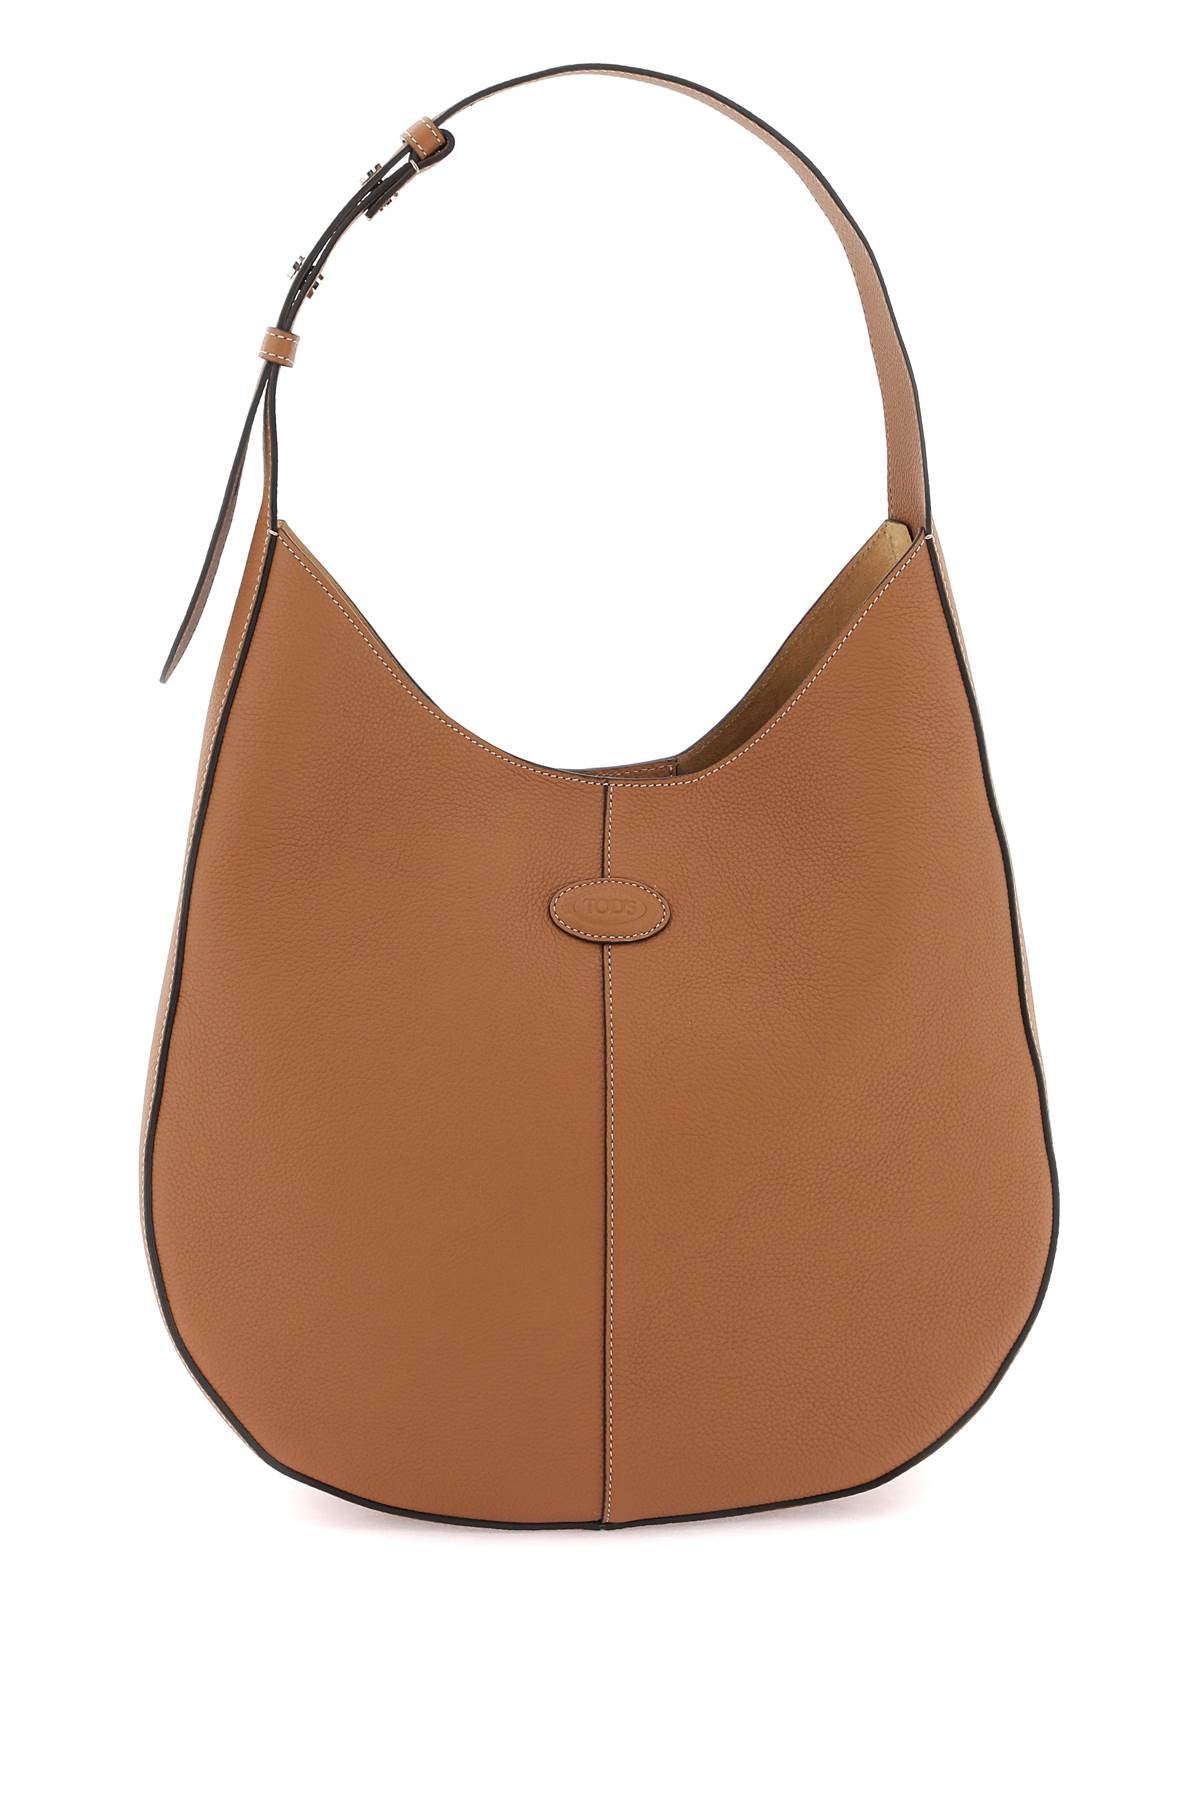 TOD'S Sophisticated Grained Leather Hobo Handbag for Women